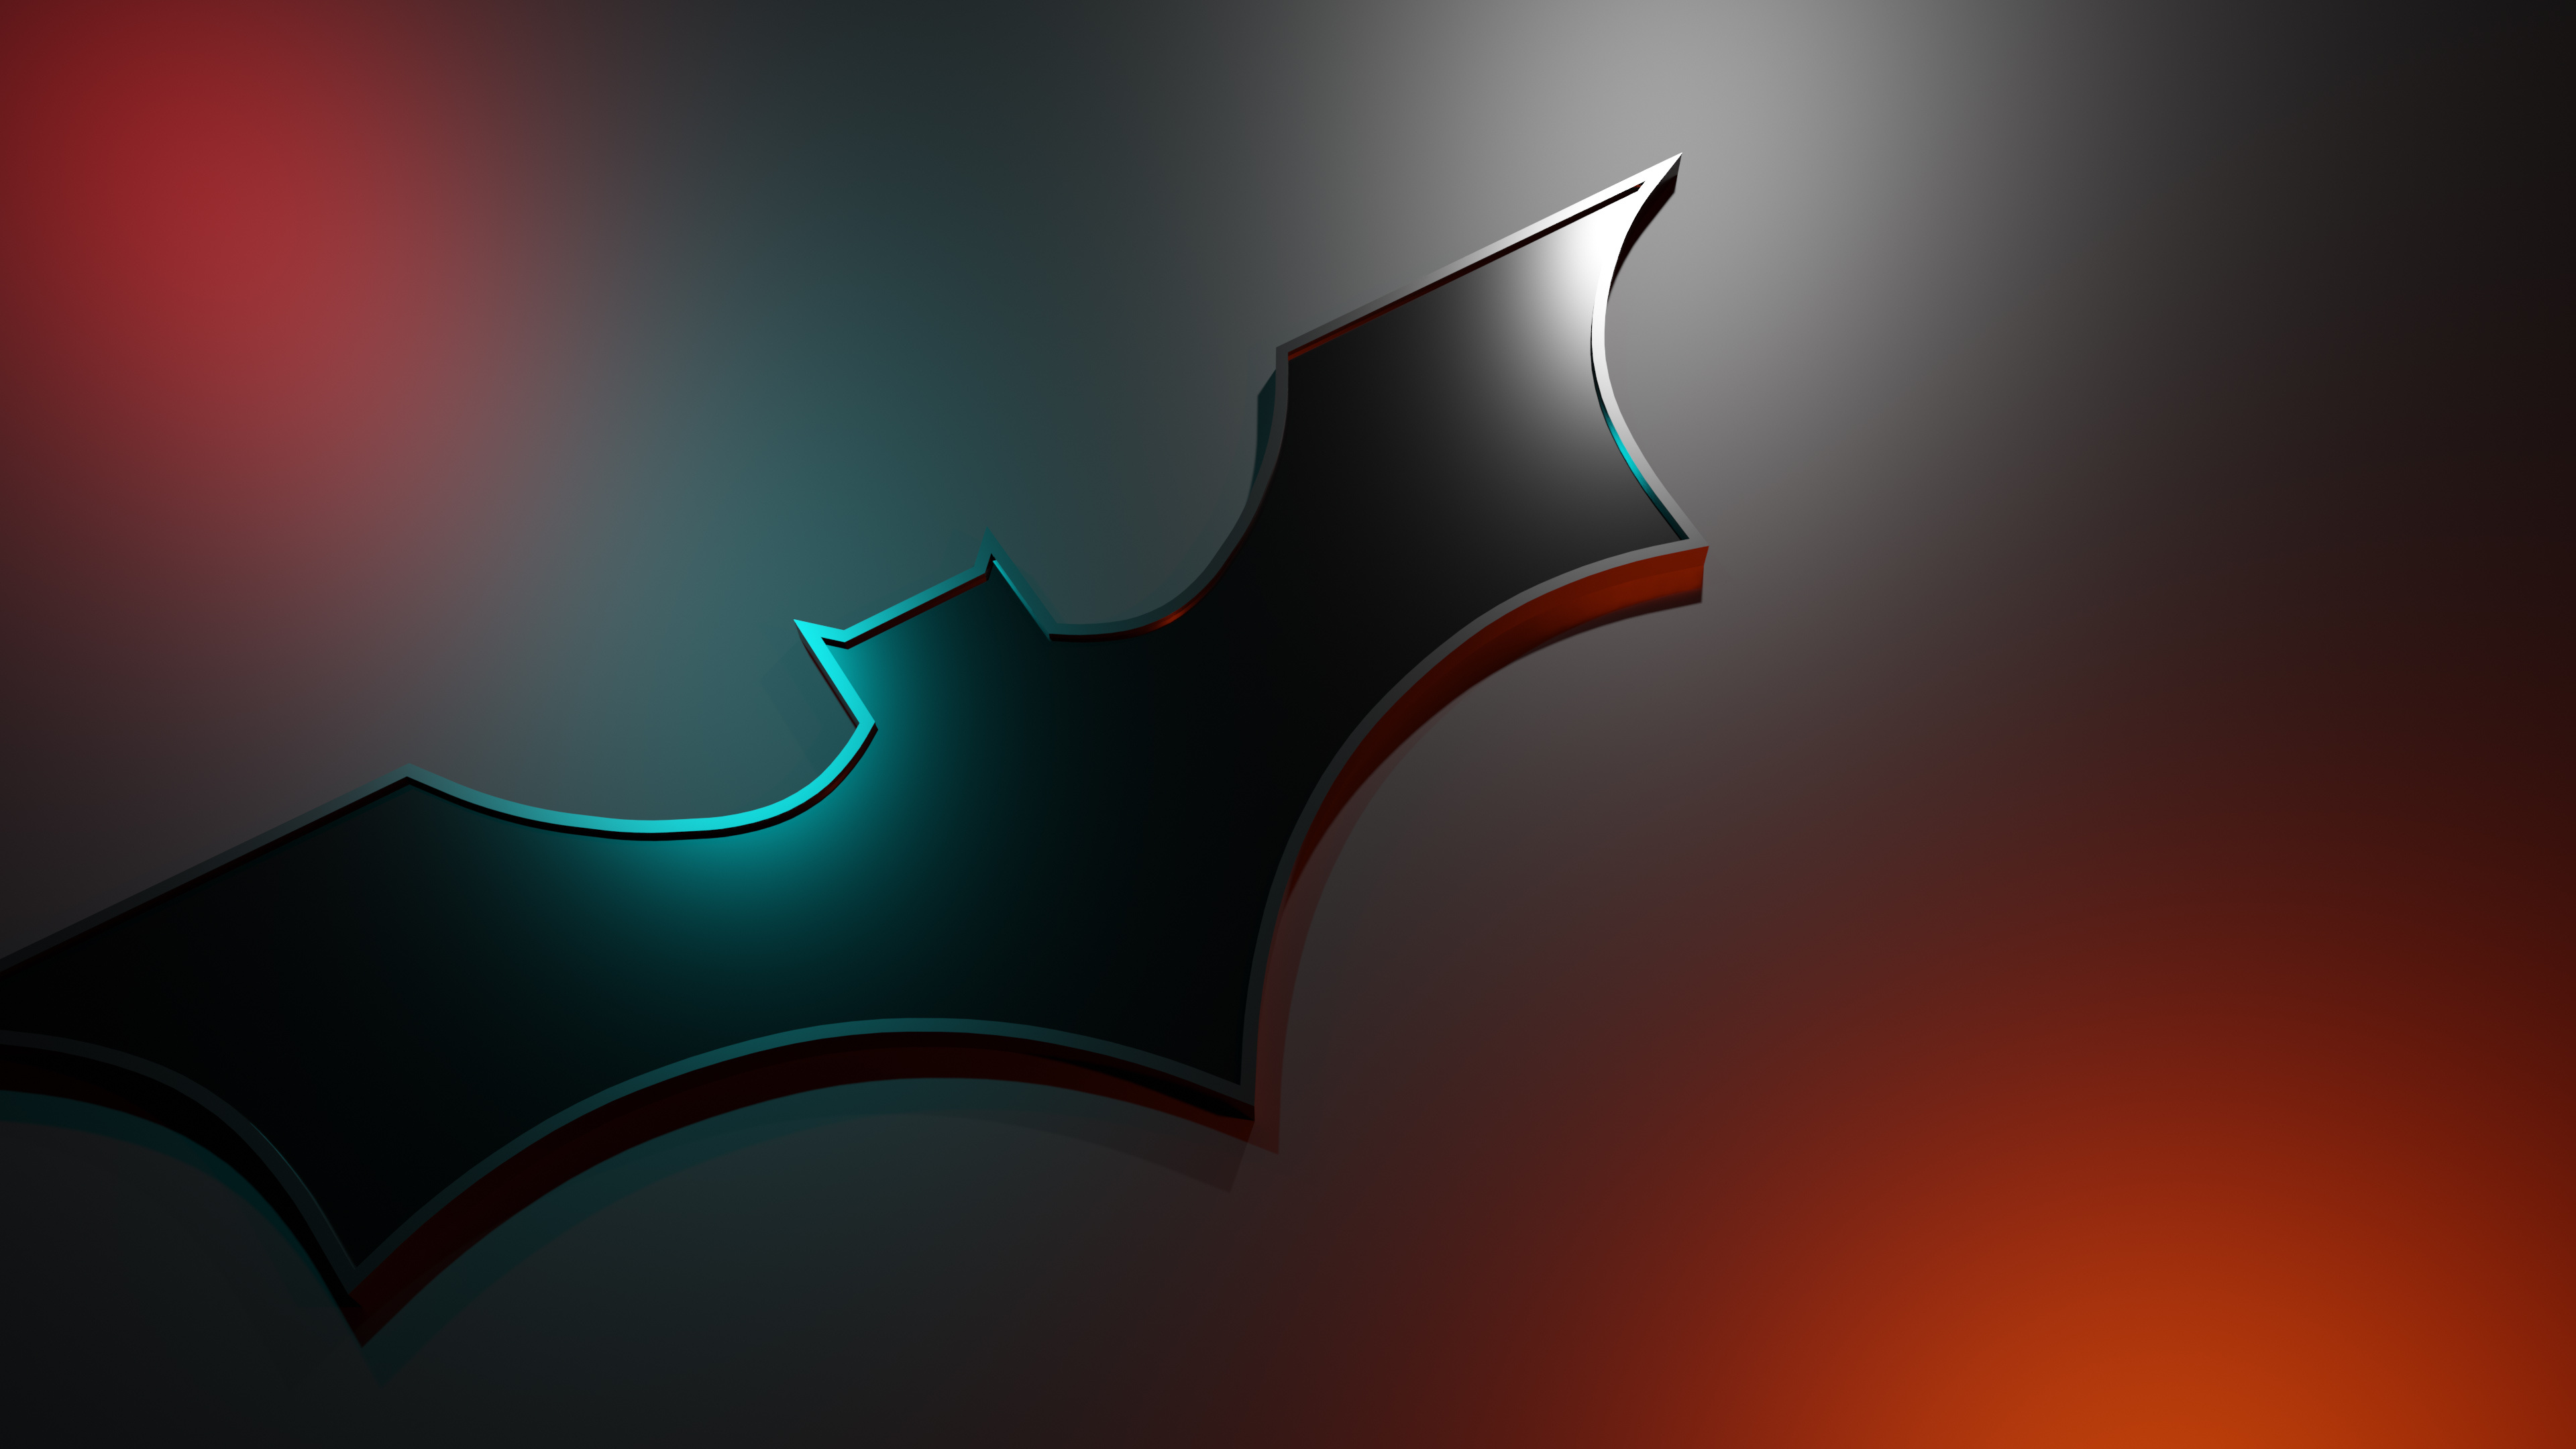 Batman Sign, Superhero logo, HD art, Epic imagery, 3840x2160 4K Desktop